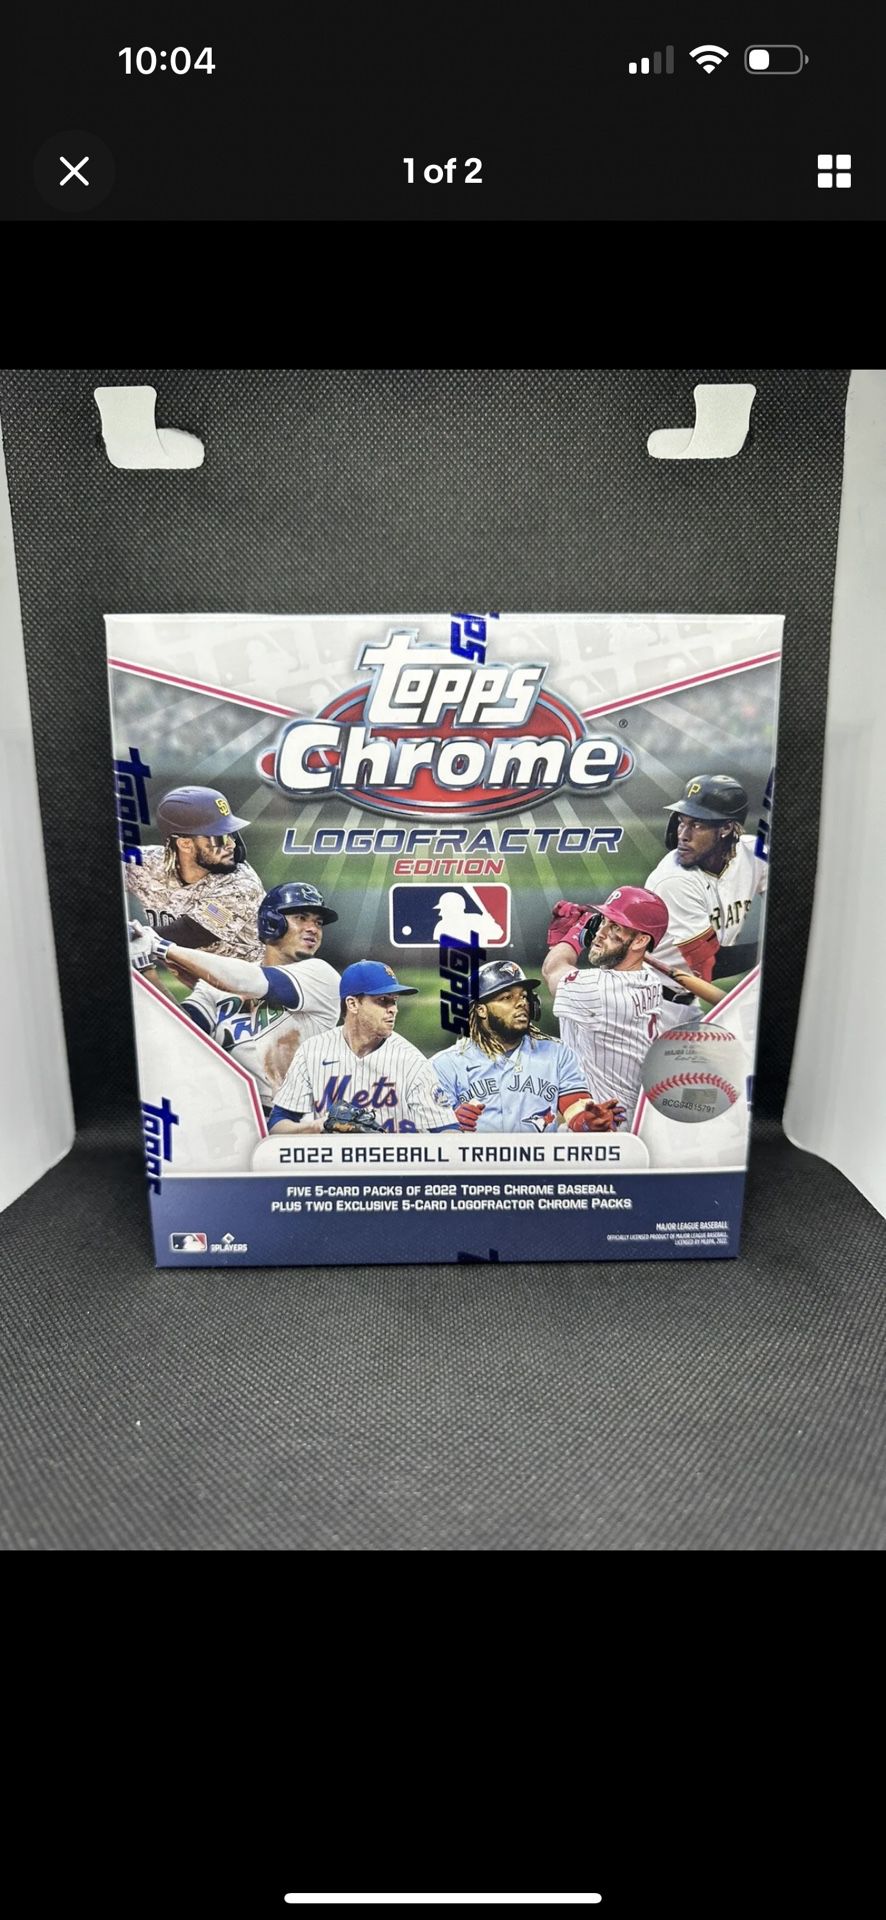 2022 Topps Chrome Logofractor Edition Baseball Factory Sealed Mega Box